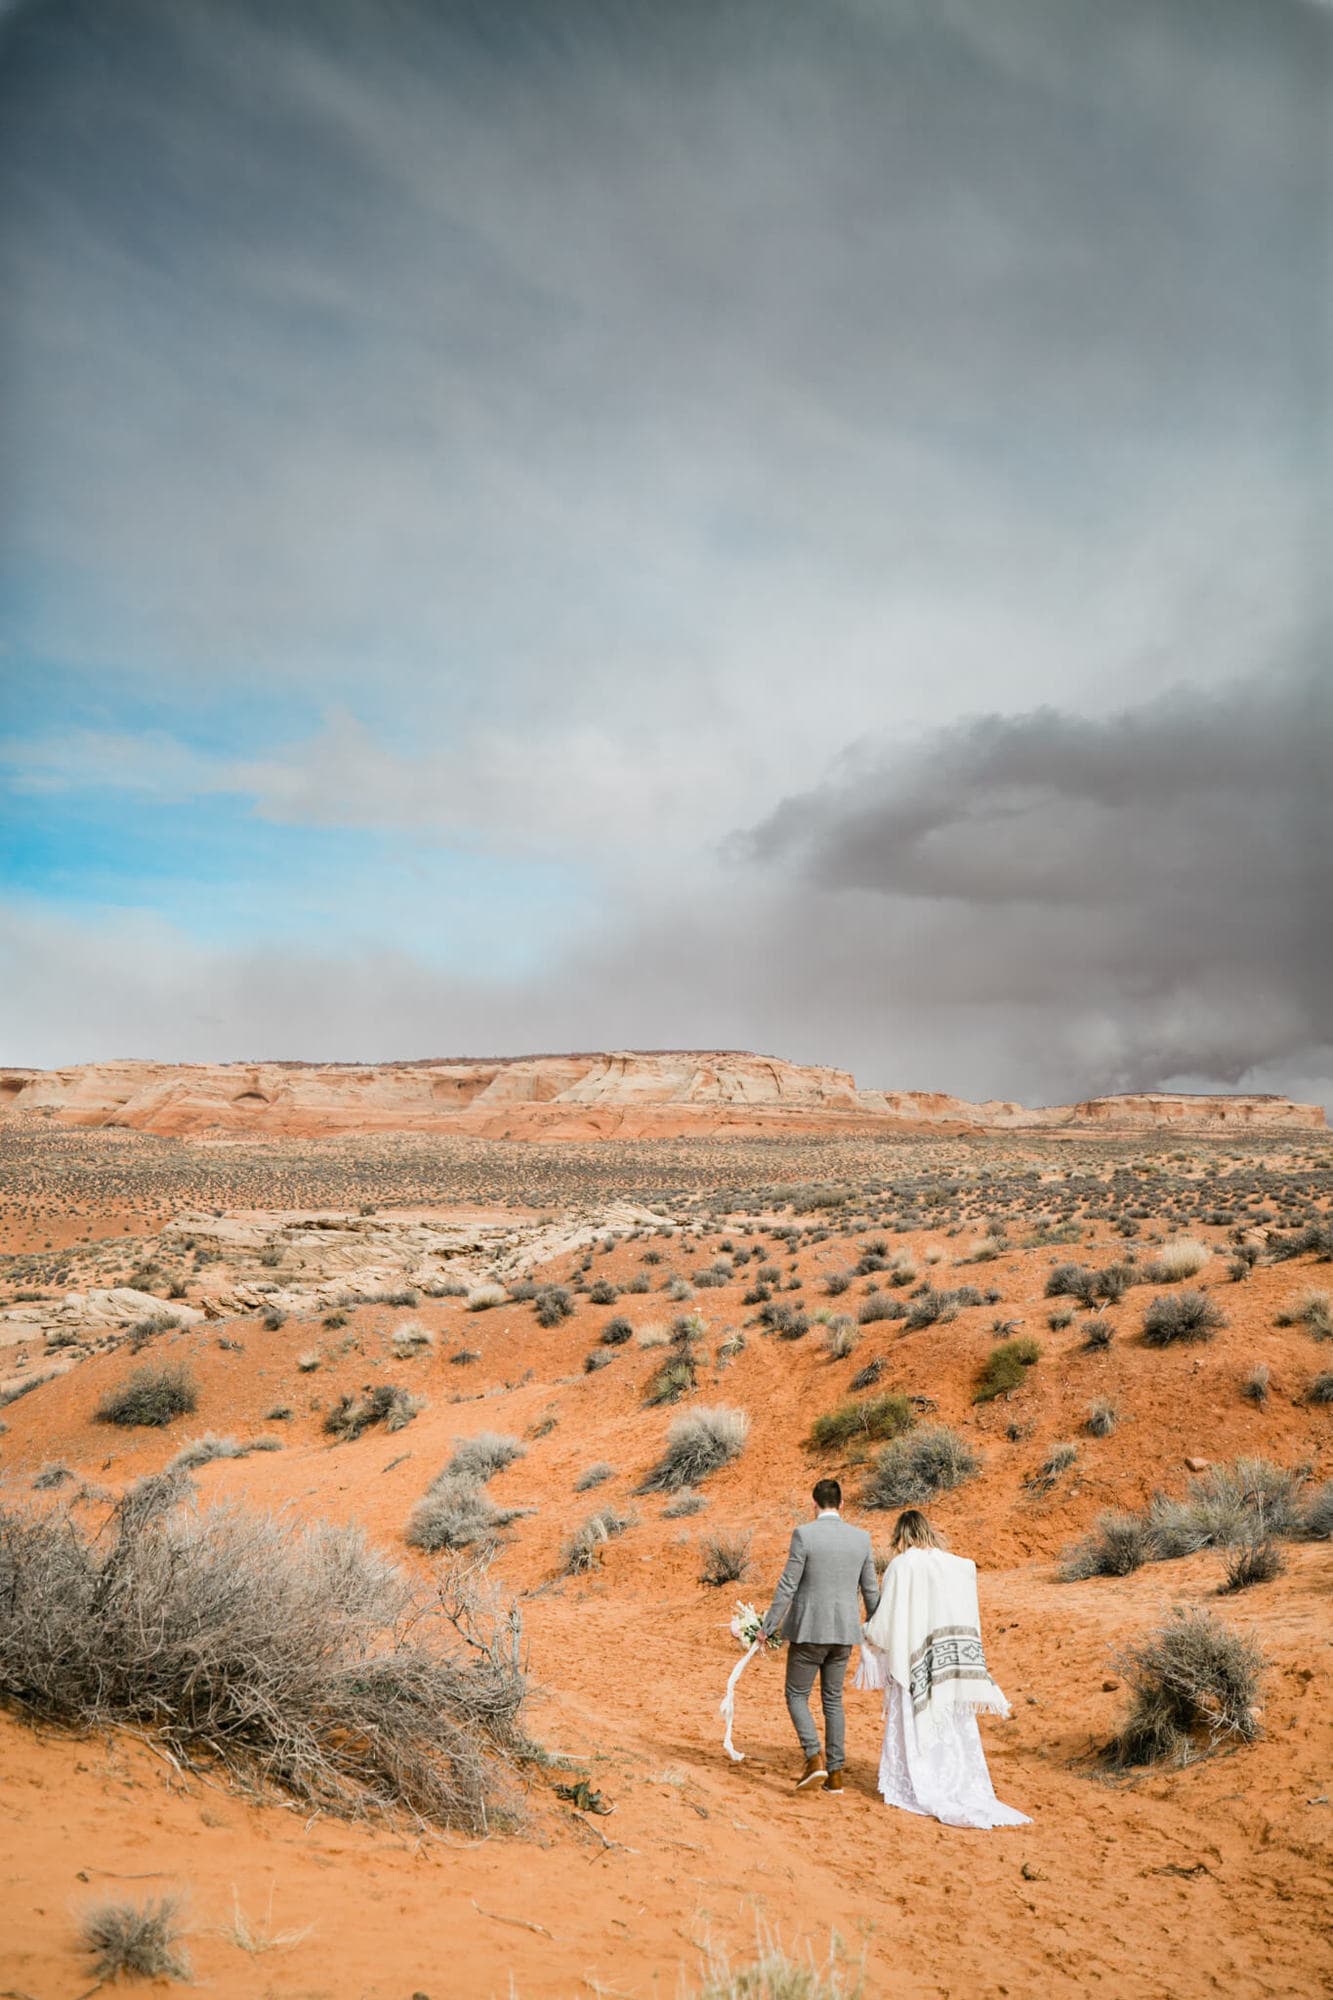 Adventurous couple walks hand in hand through the desert. A storm looms on the horizon.